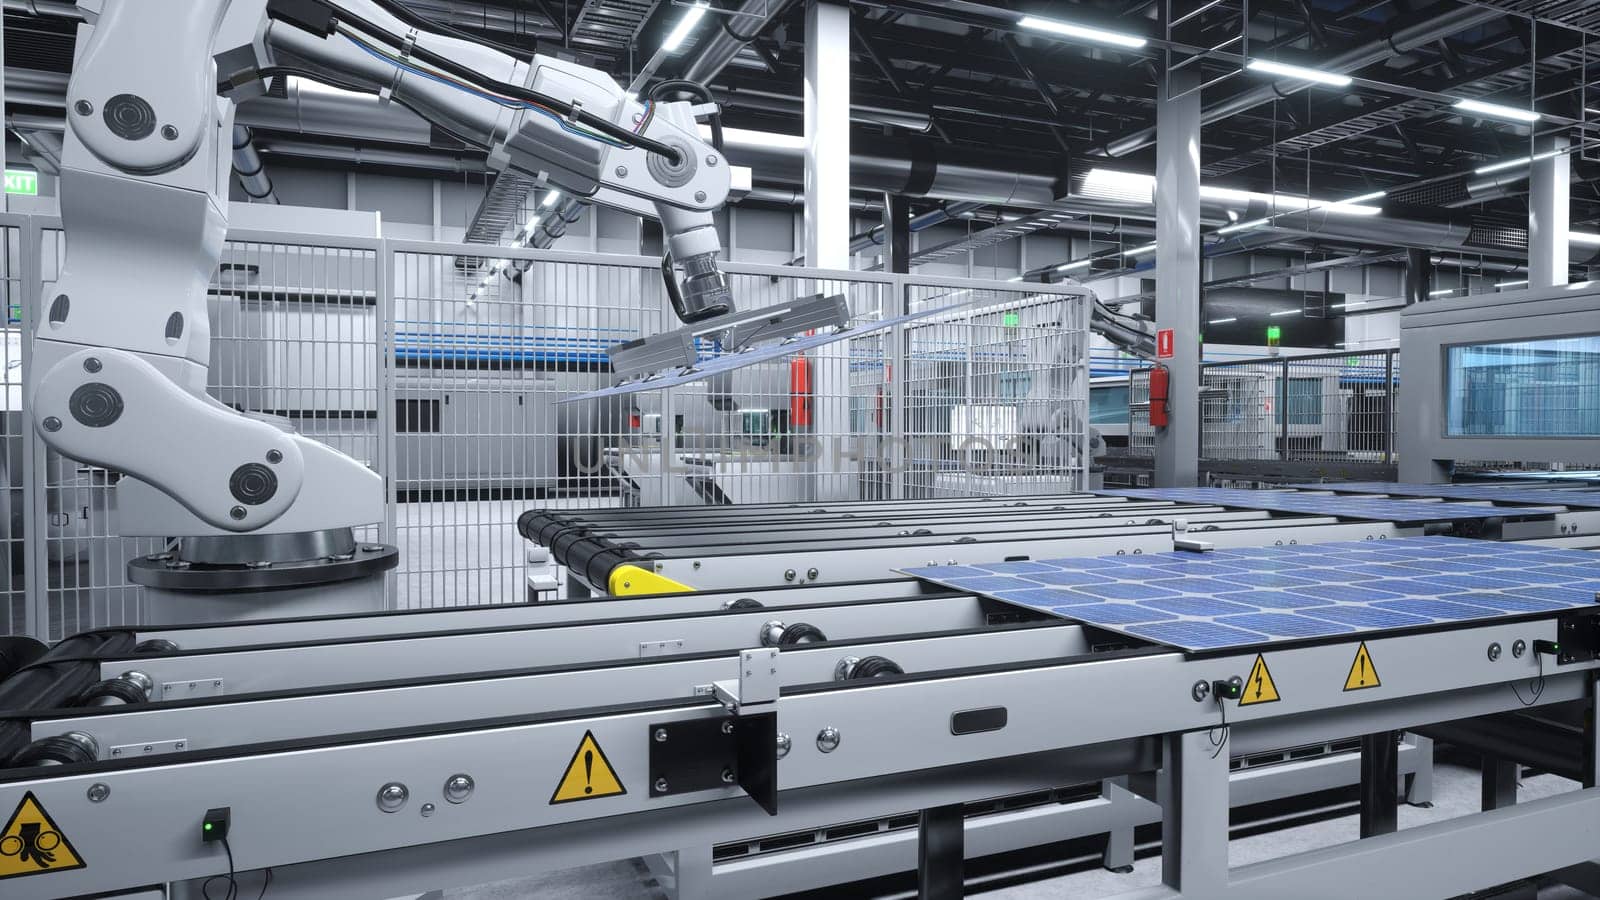 Robot arms placing solar panels on large production line, 3D illustration by DCStudio